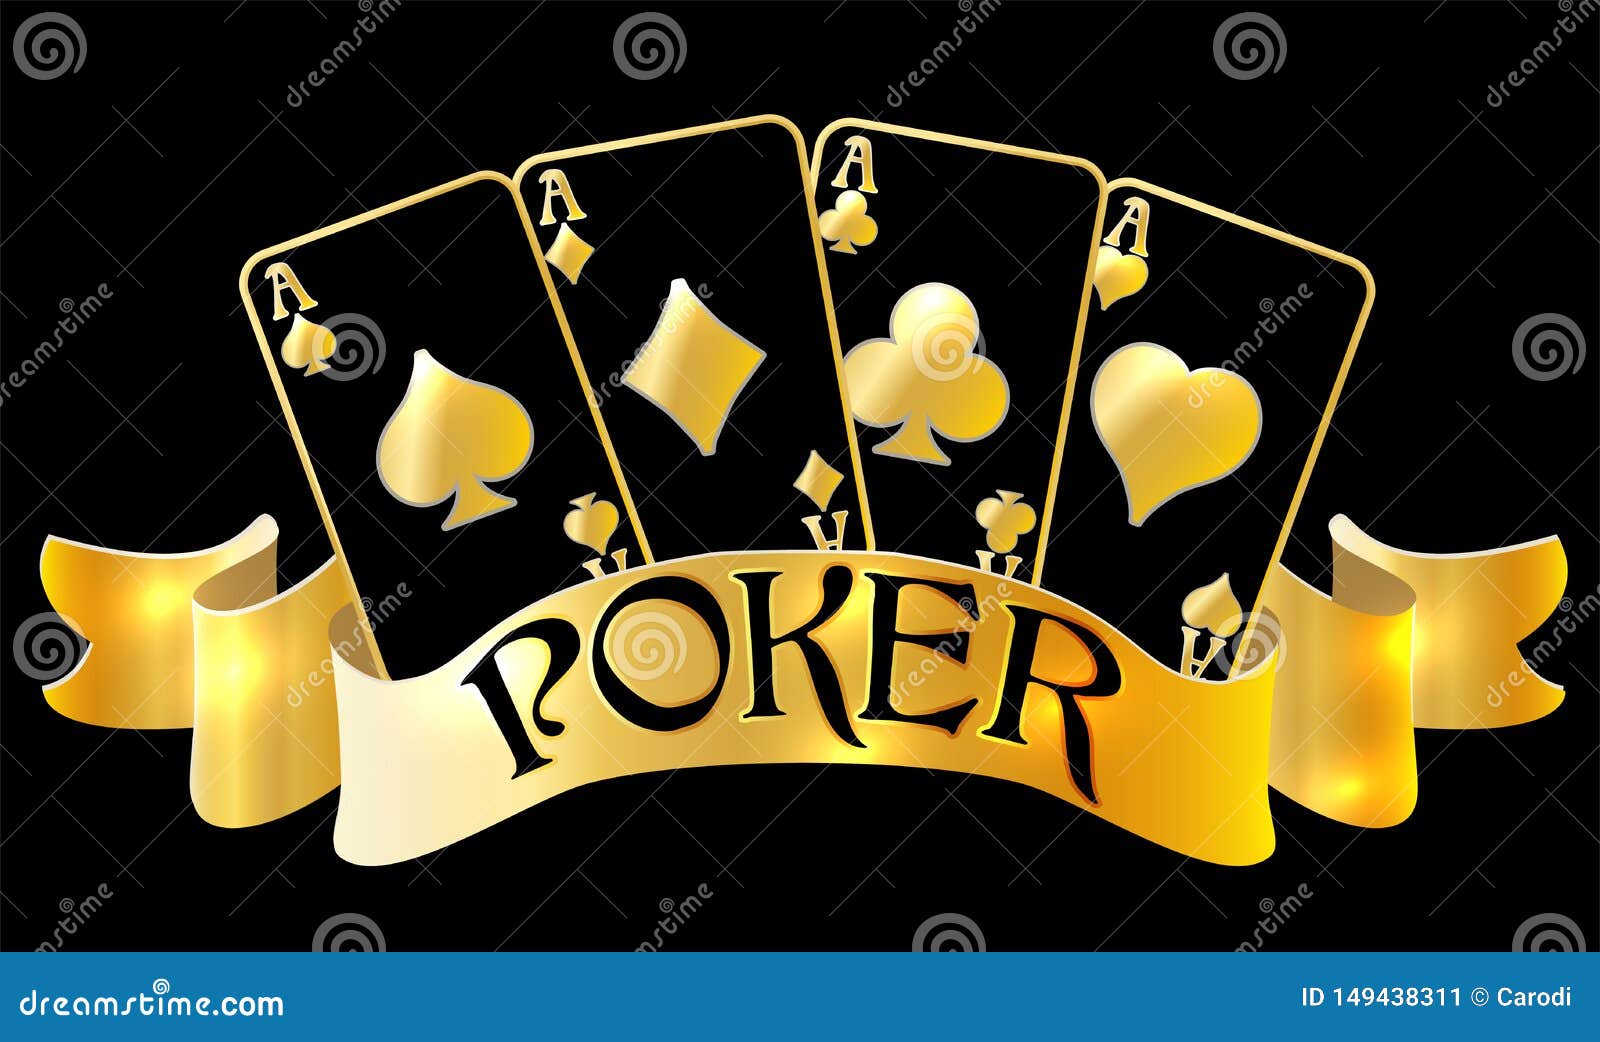 e poker